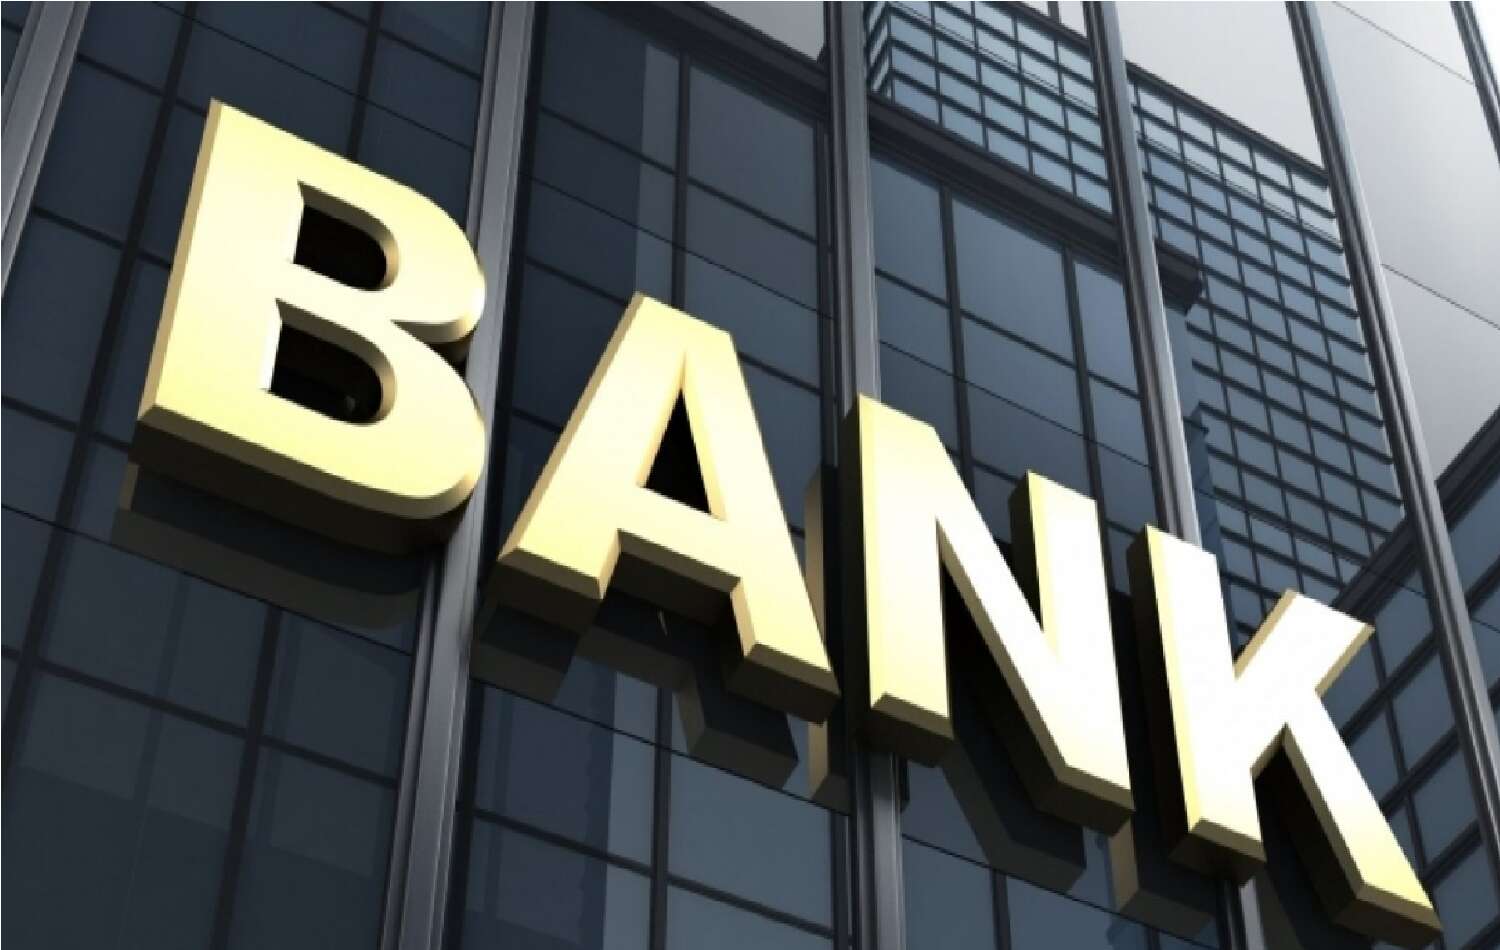 Sarkari Naukri: Get job in this bank without giving exam